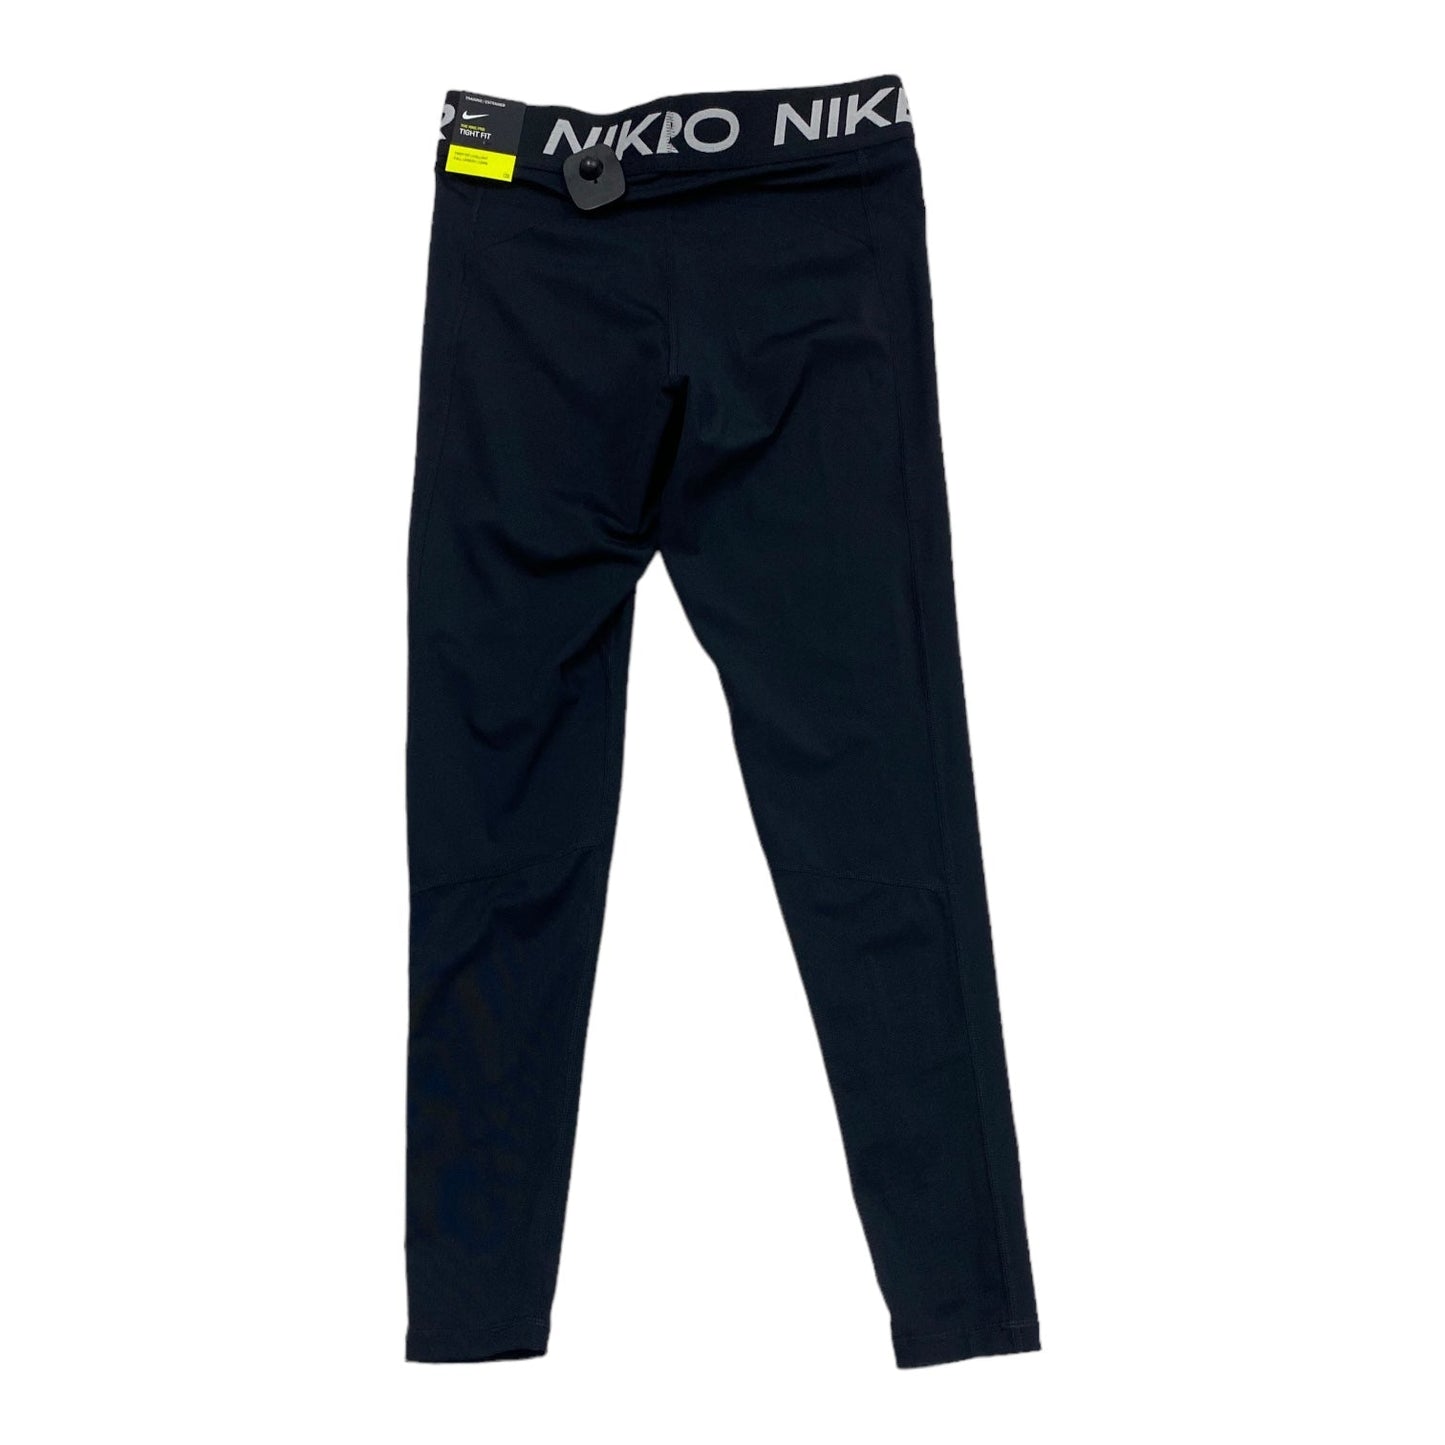 Black & White Athletic Pants Nike, Size M